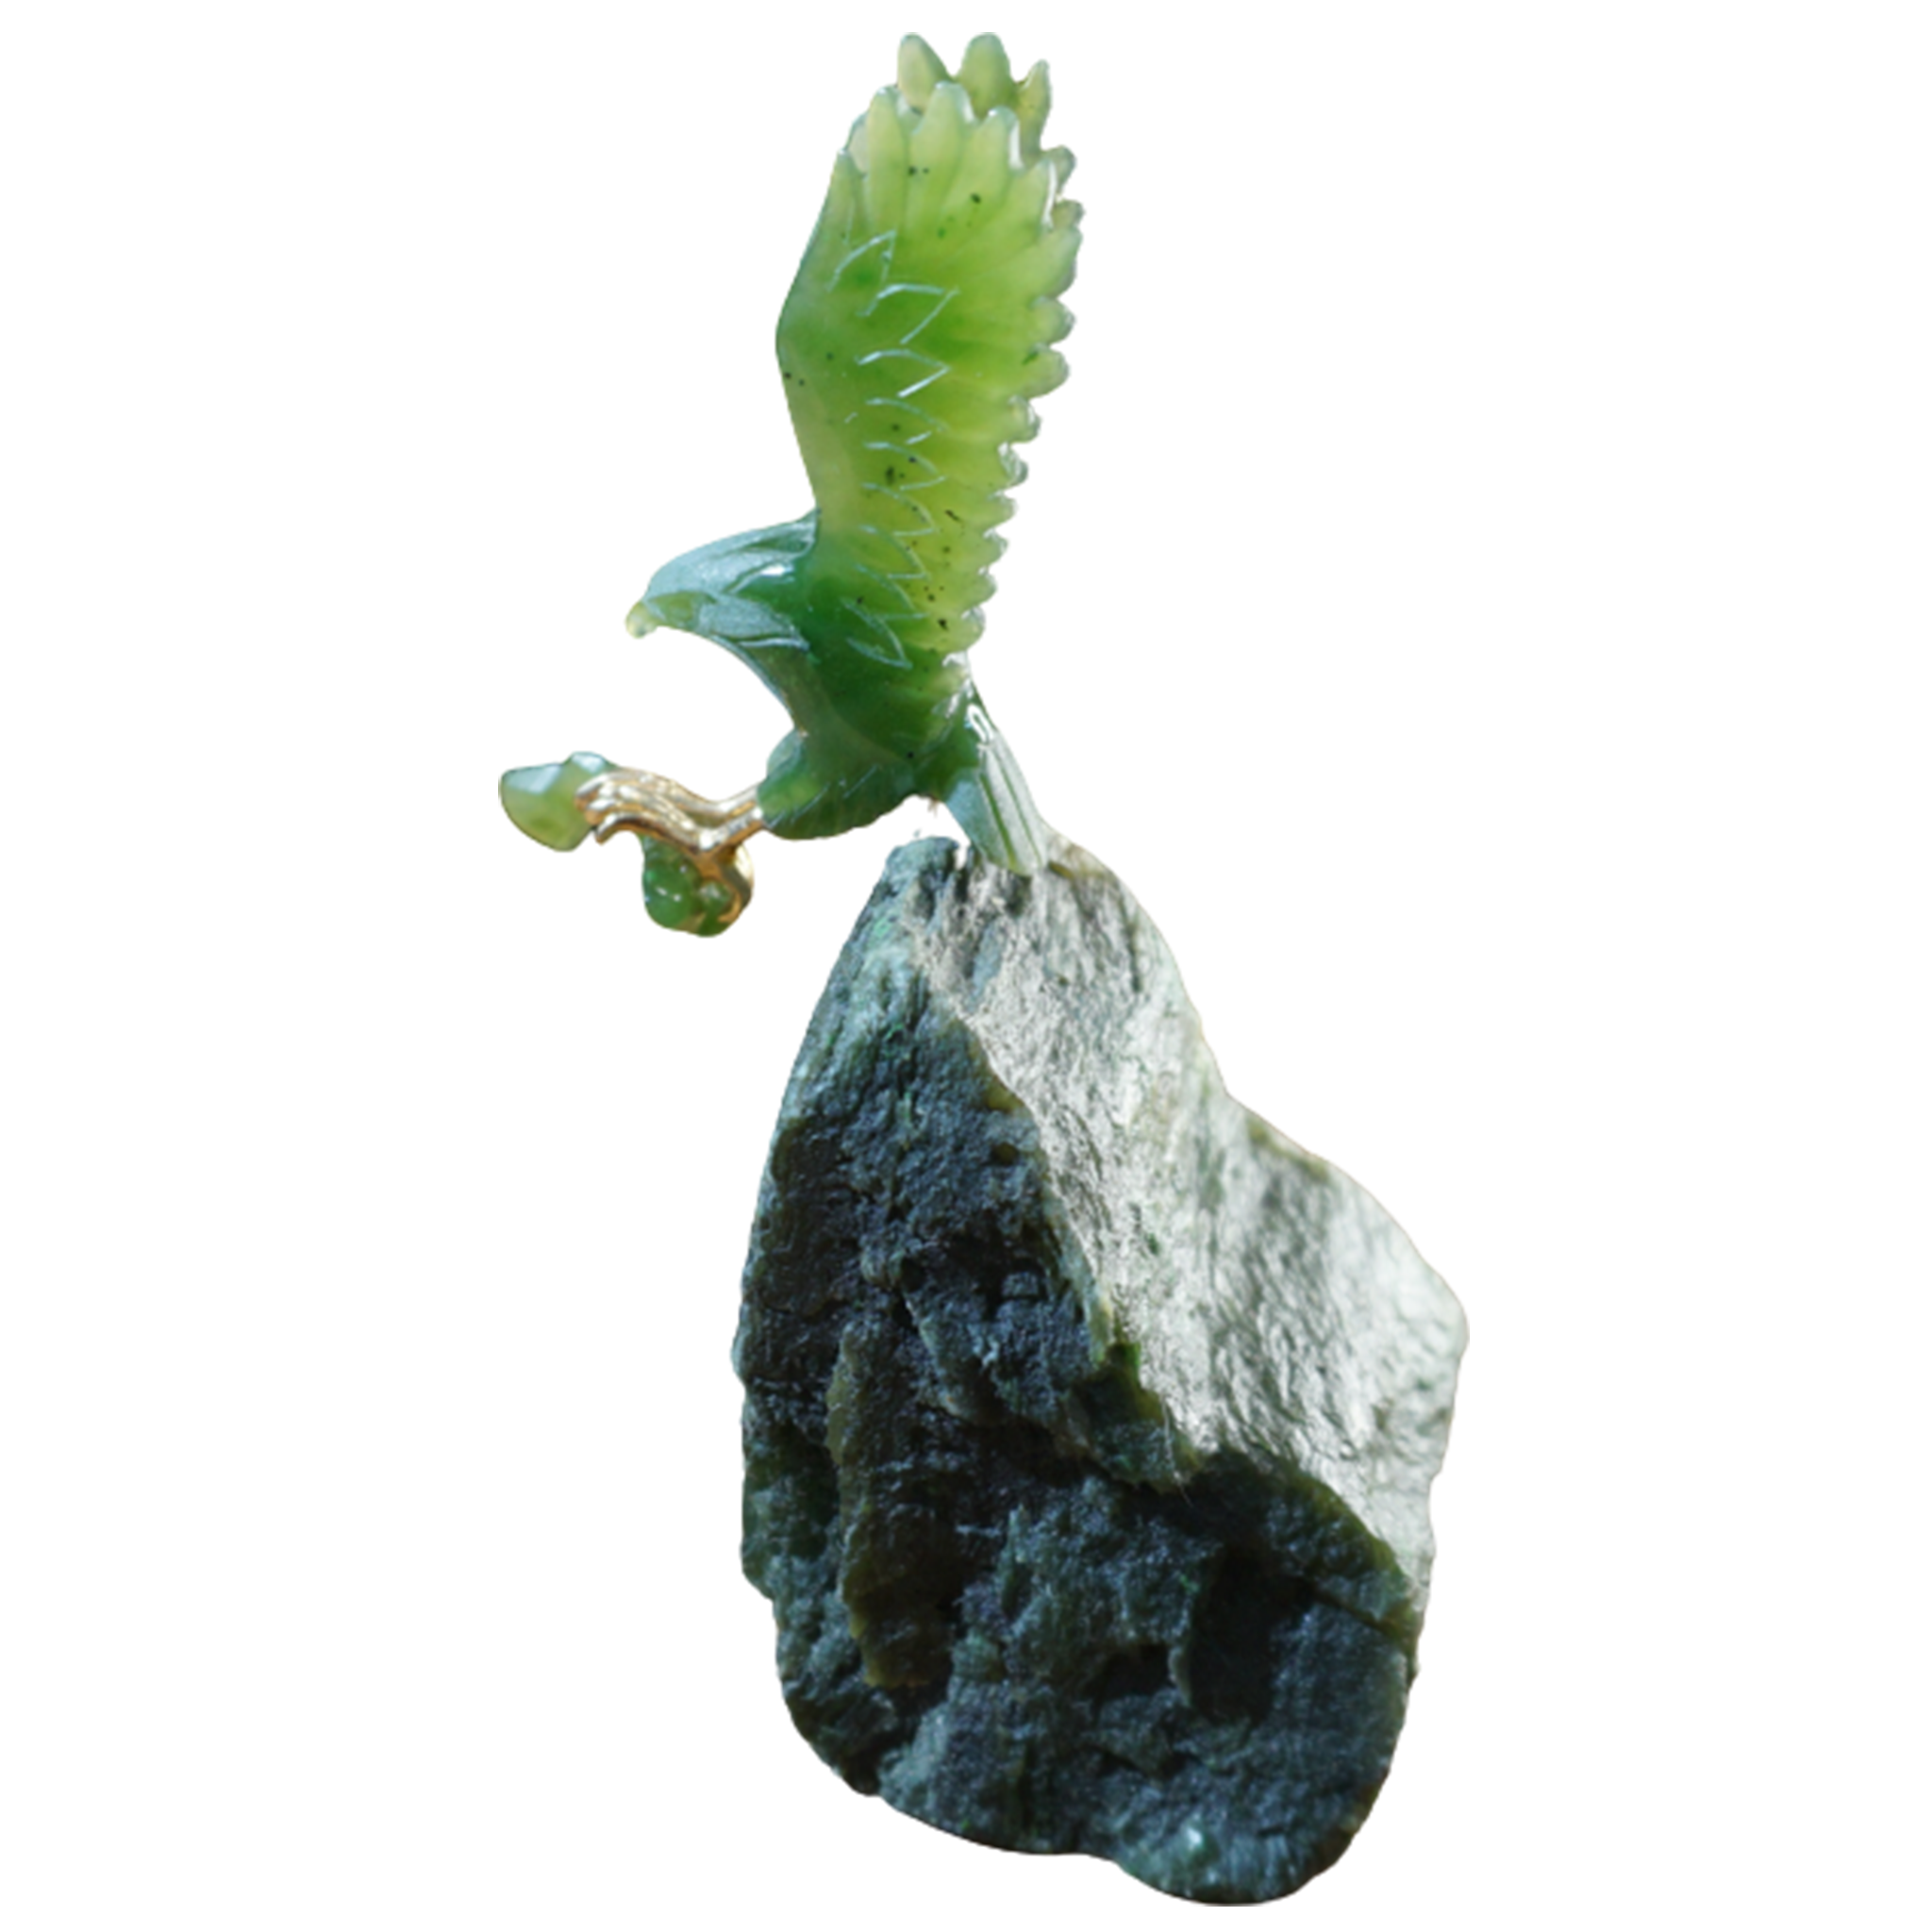 Jade Eagle flying on a rock